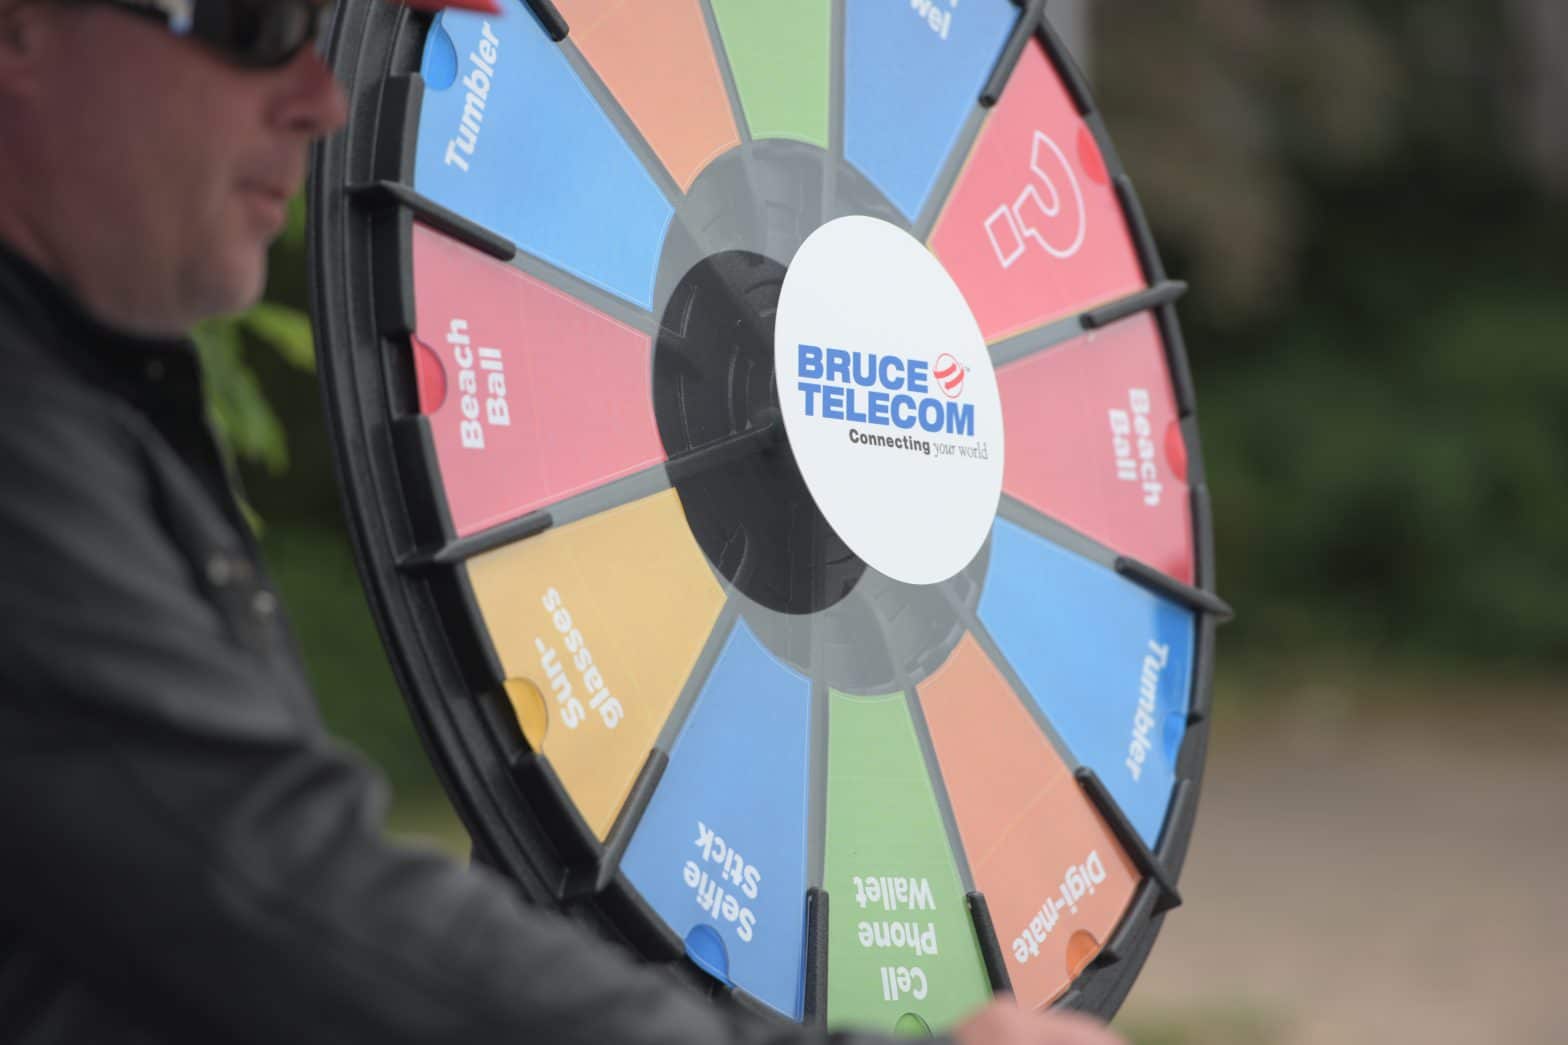 Bruce Telecom lucky wheel ready to spin